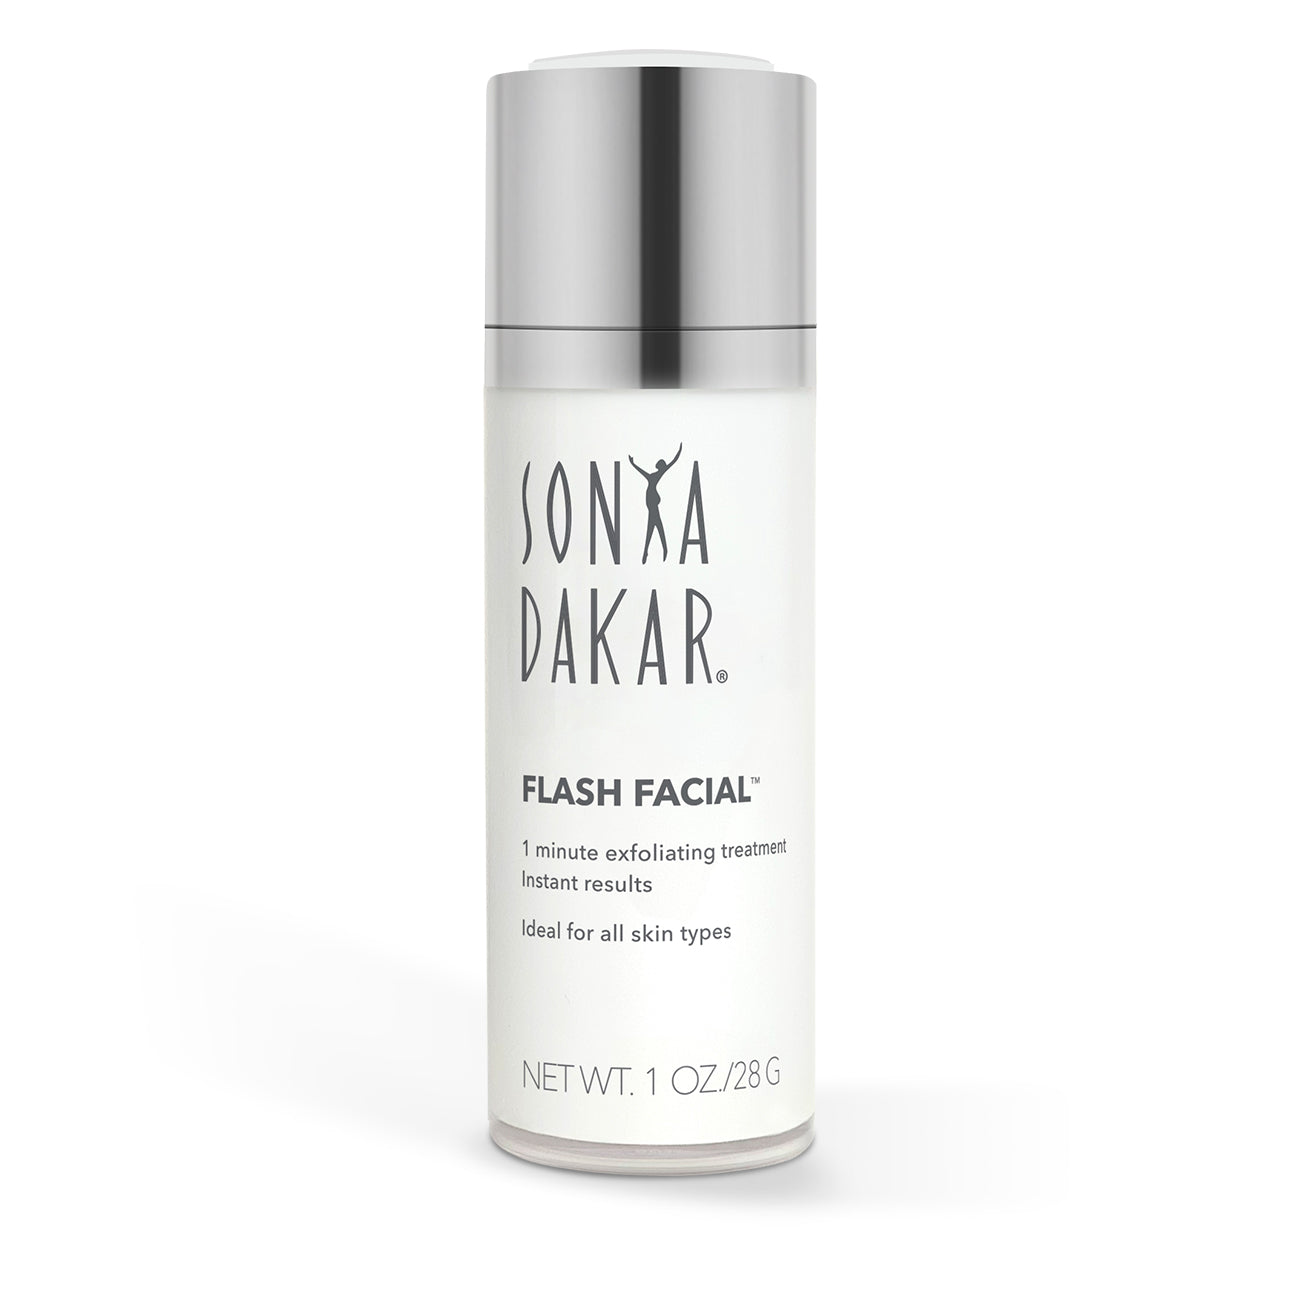 Sonya Dakar Flash Facial